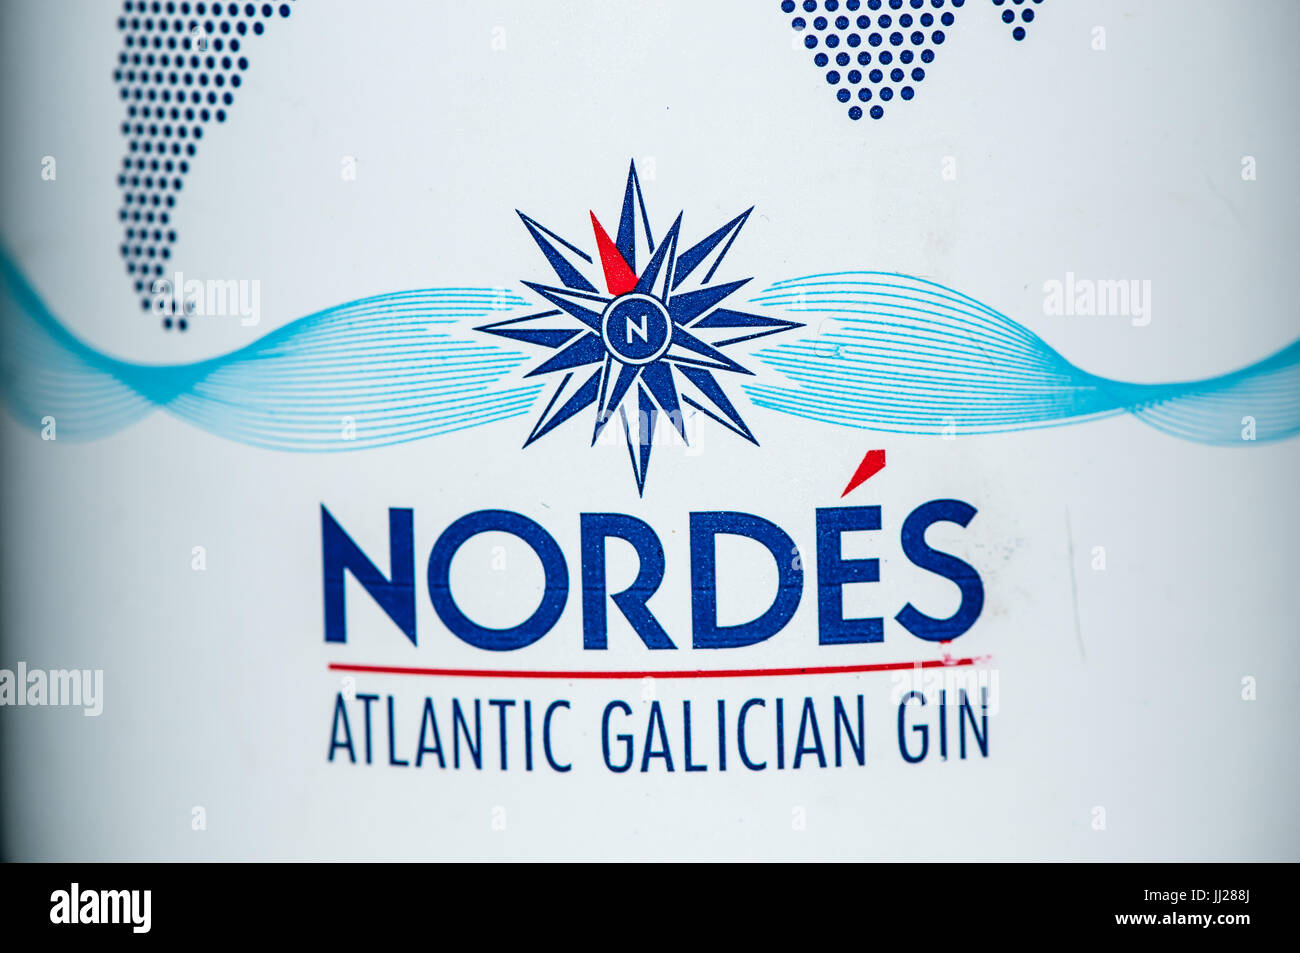 bottle of nordes atlantic galician gin Stock Photo - Alamy